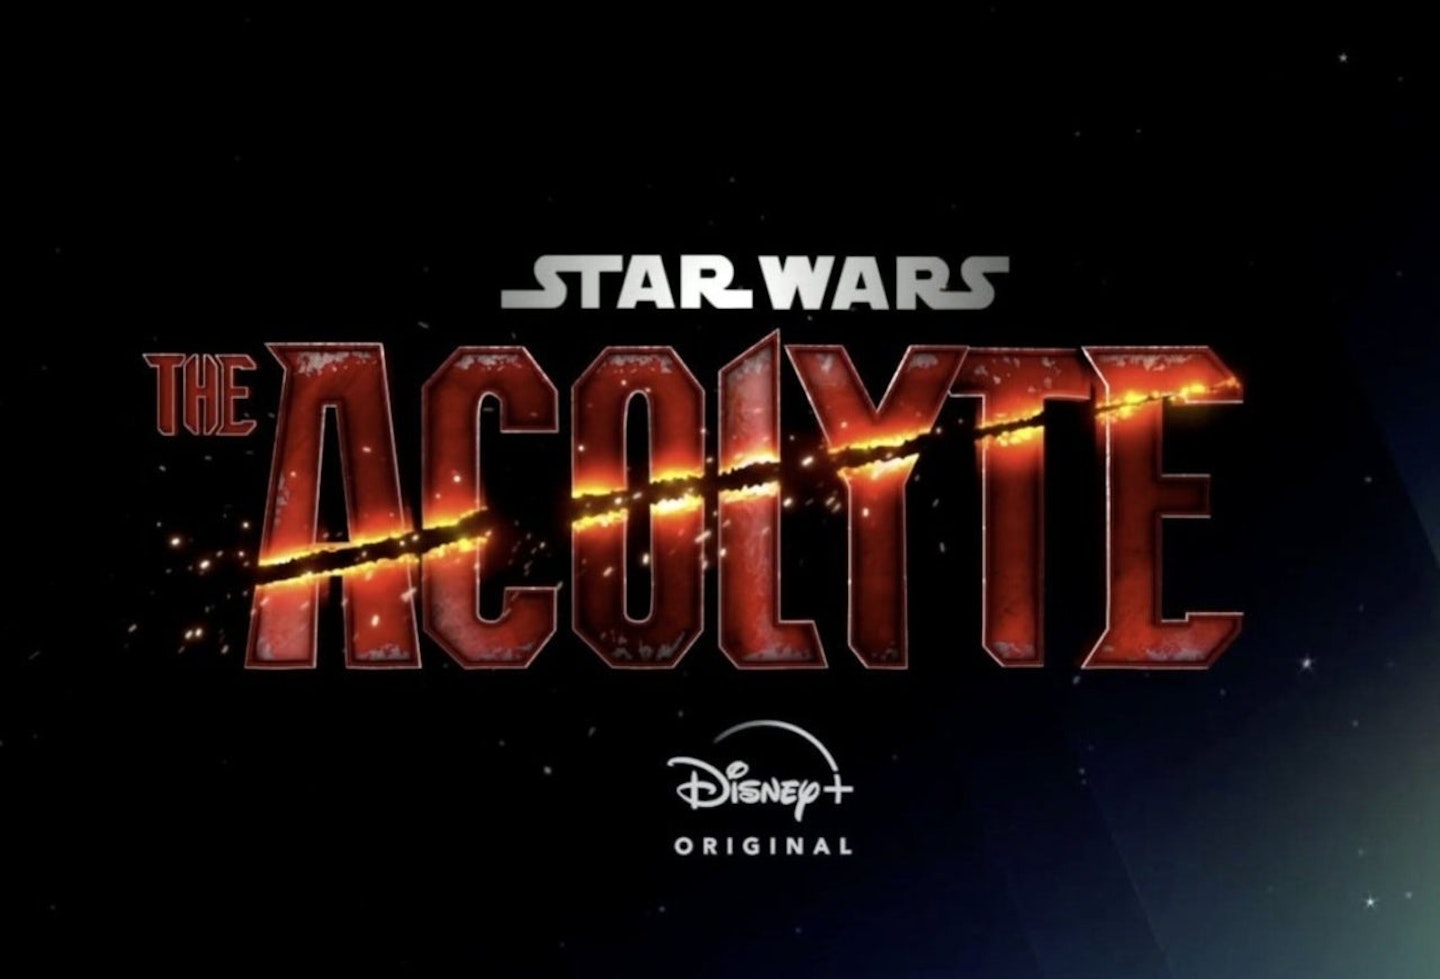 Star Wars Acolyte logo